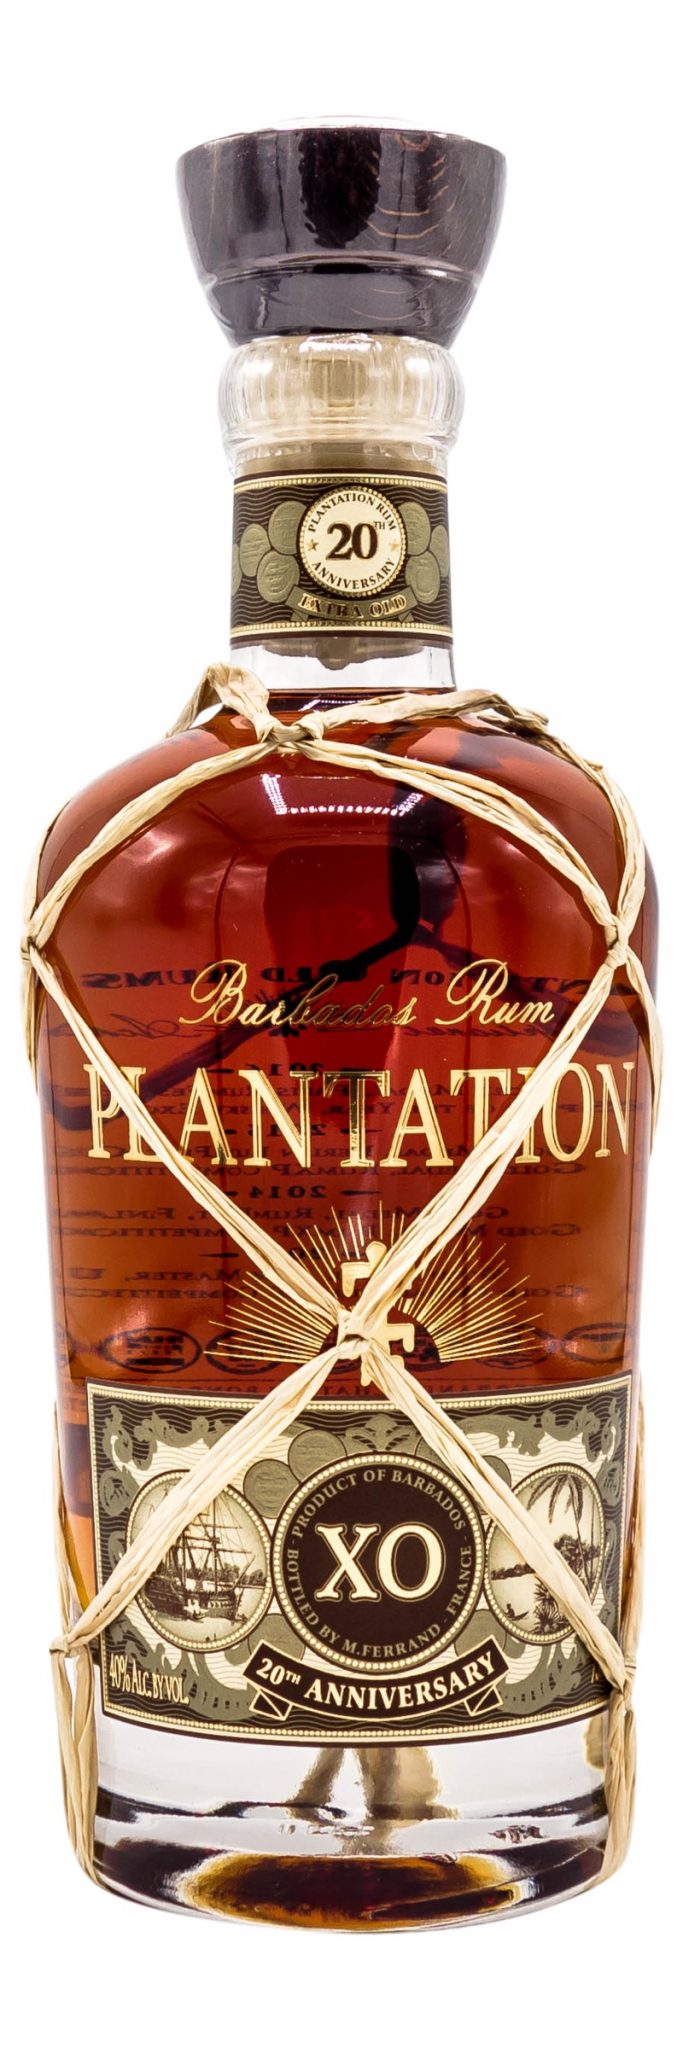 Plantation Rum XO 20th Anniversary 750ml